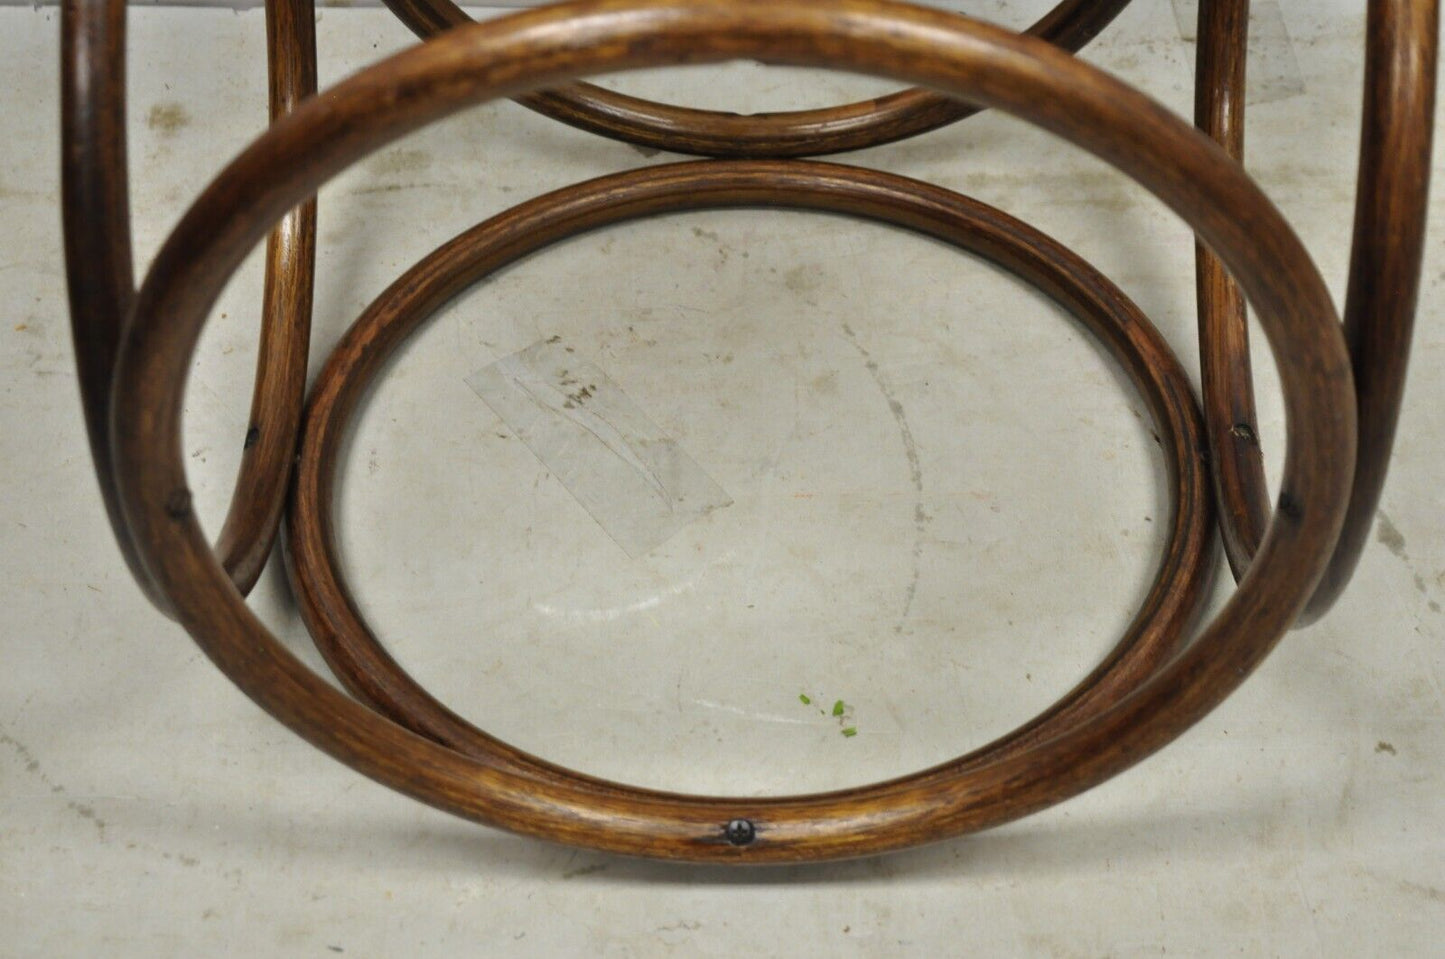 Vintage Mid Century Modern Thonet Bentwood Cane Seat Round Stool (B)